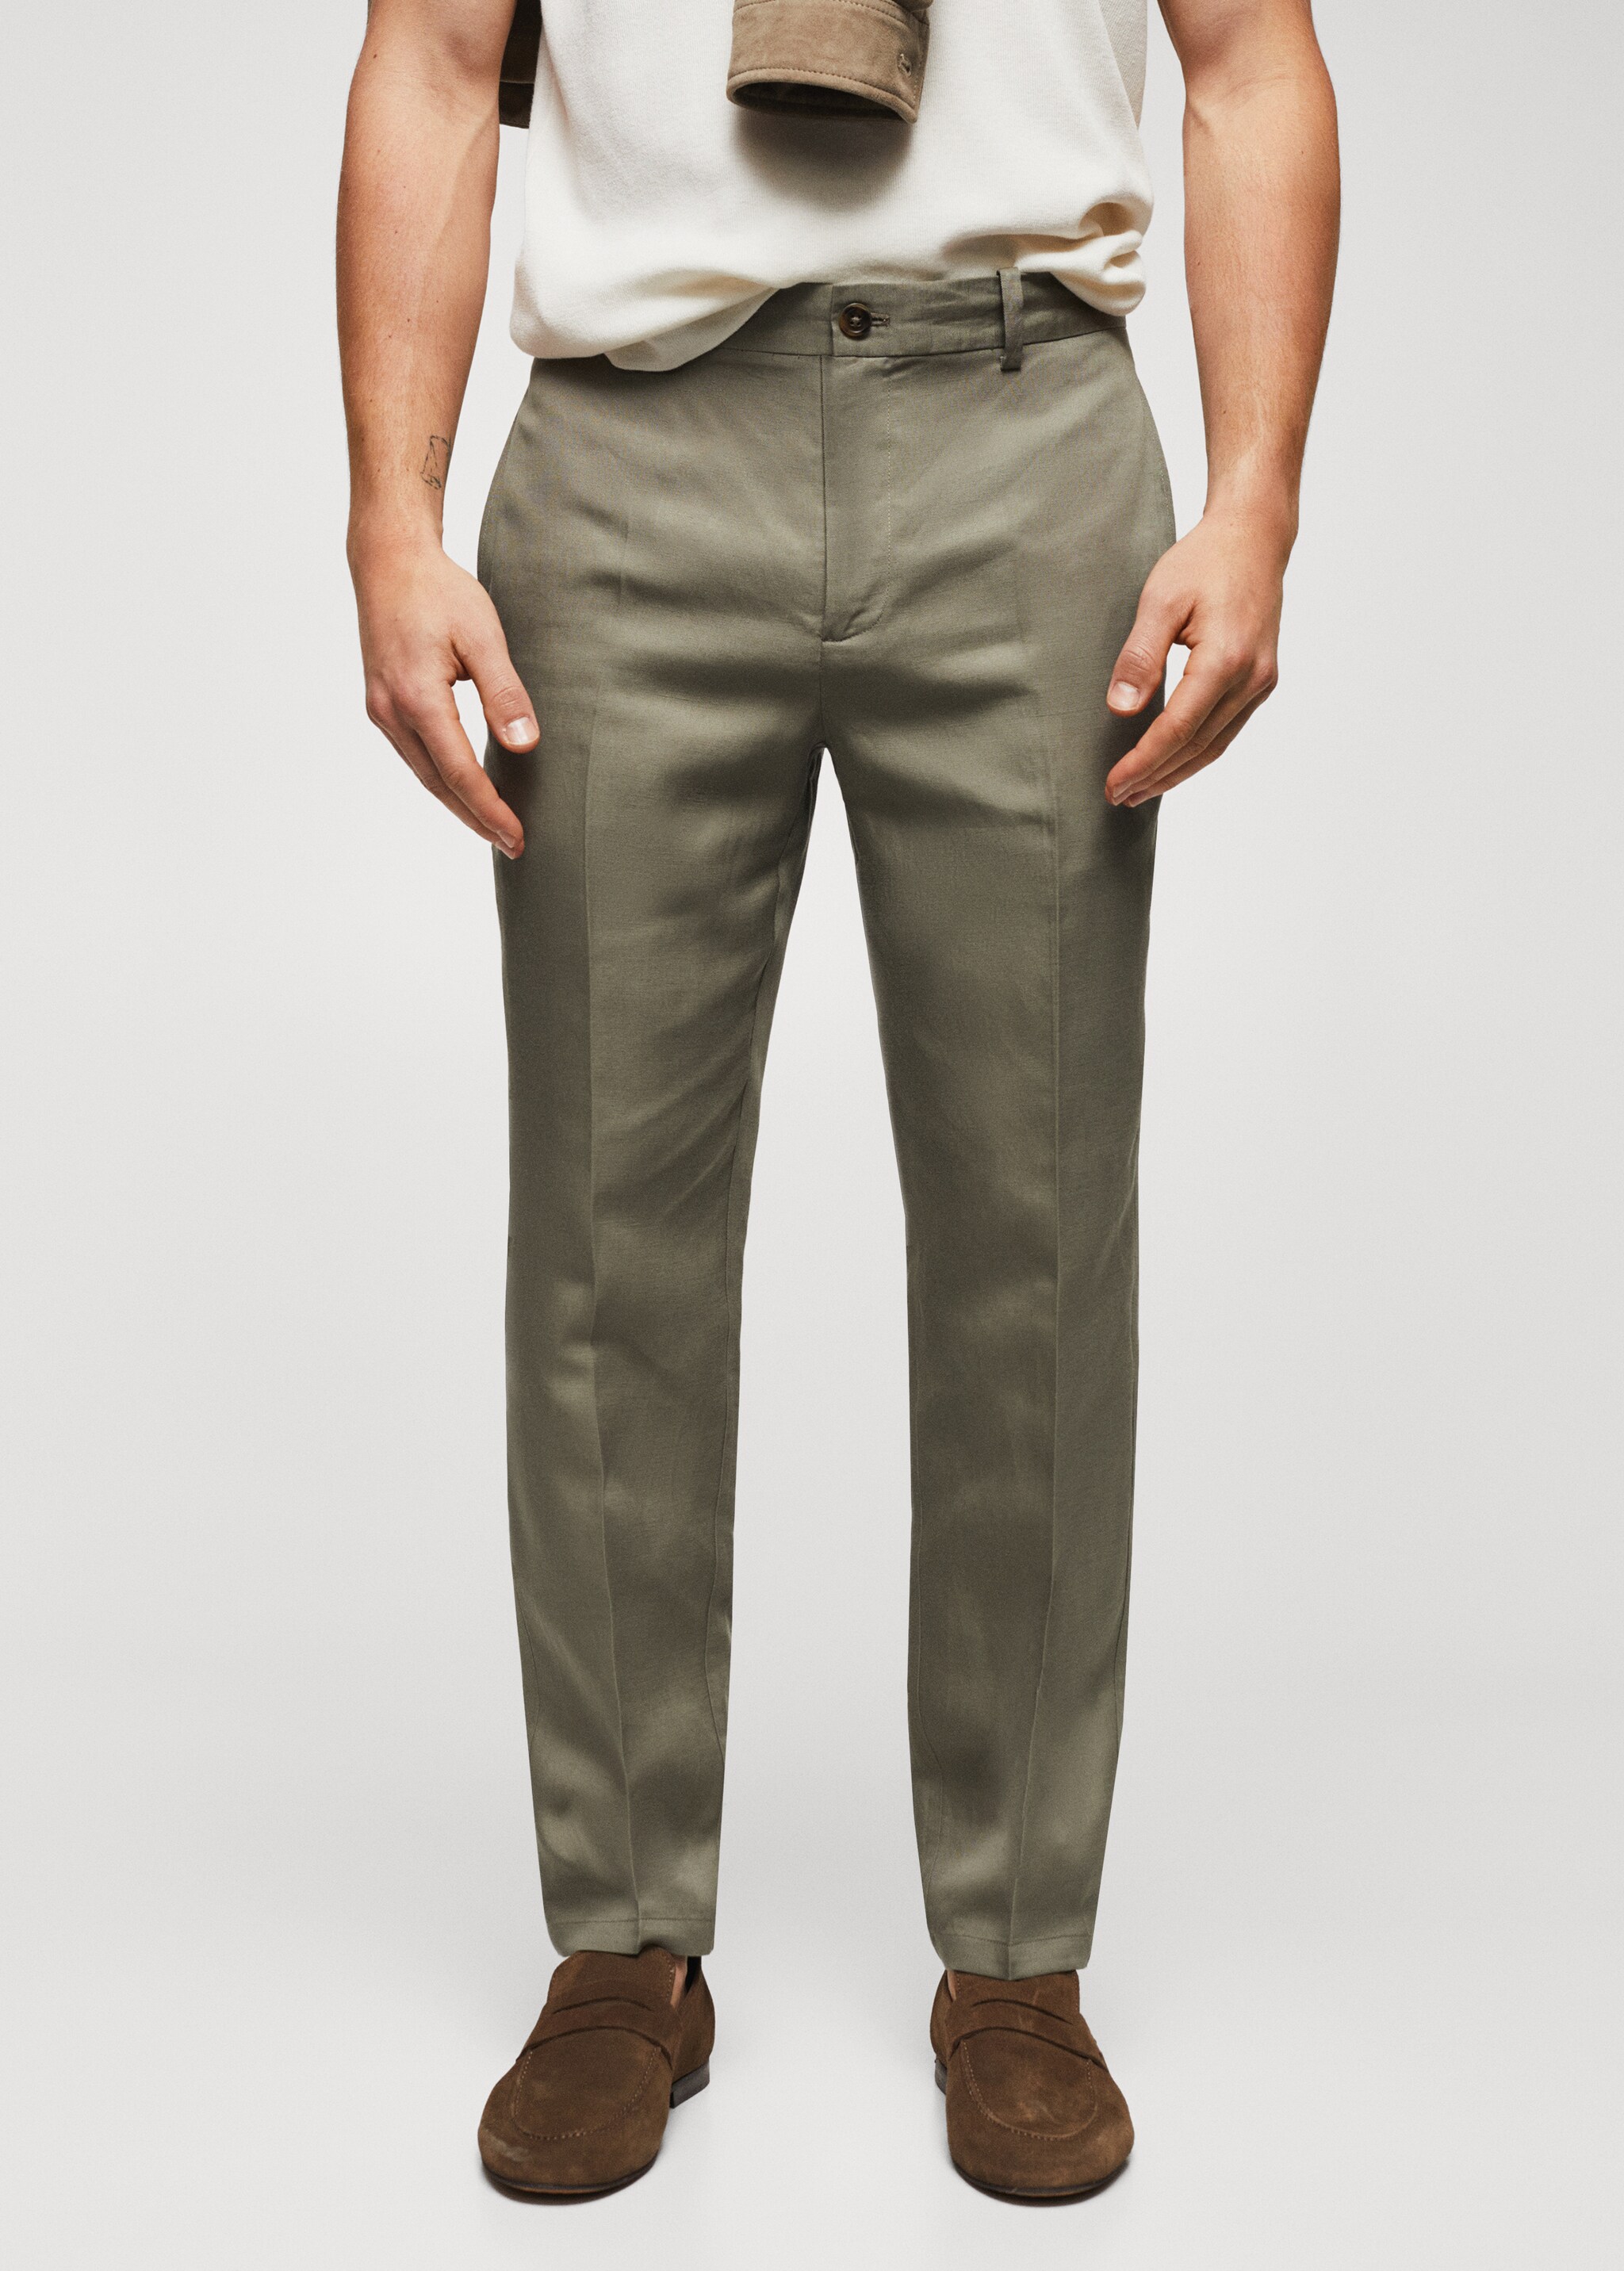 Pantalón slim fit lyocell lino  - Plano medio